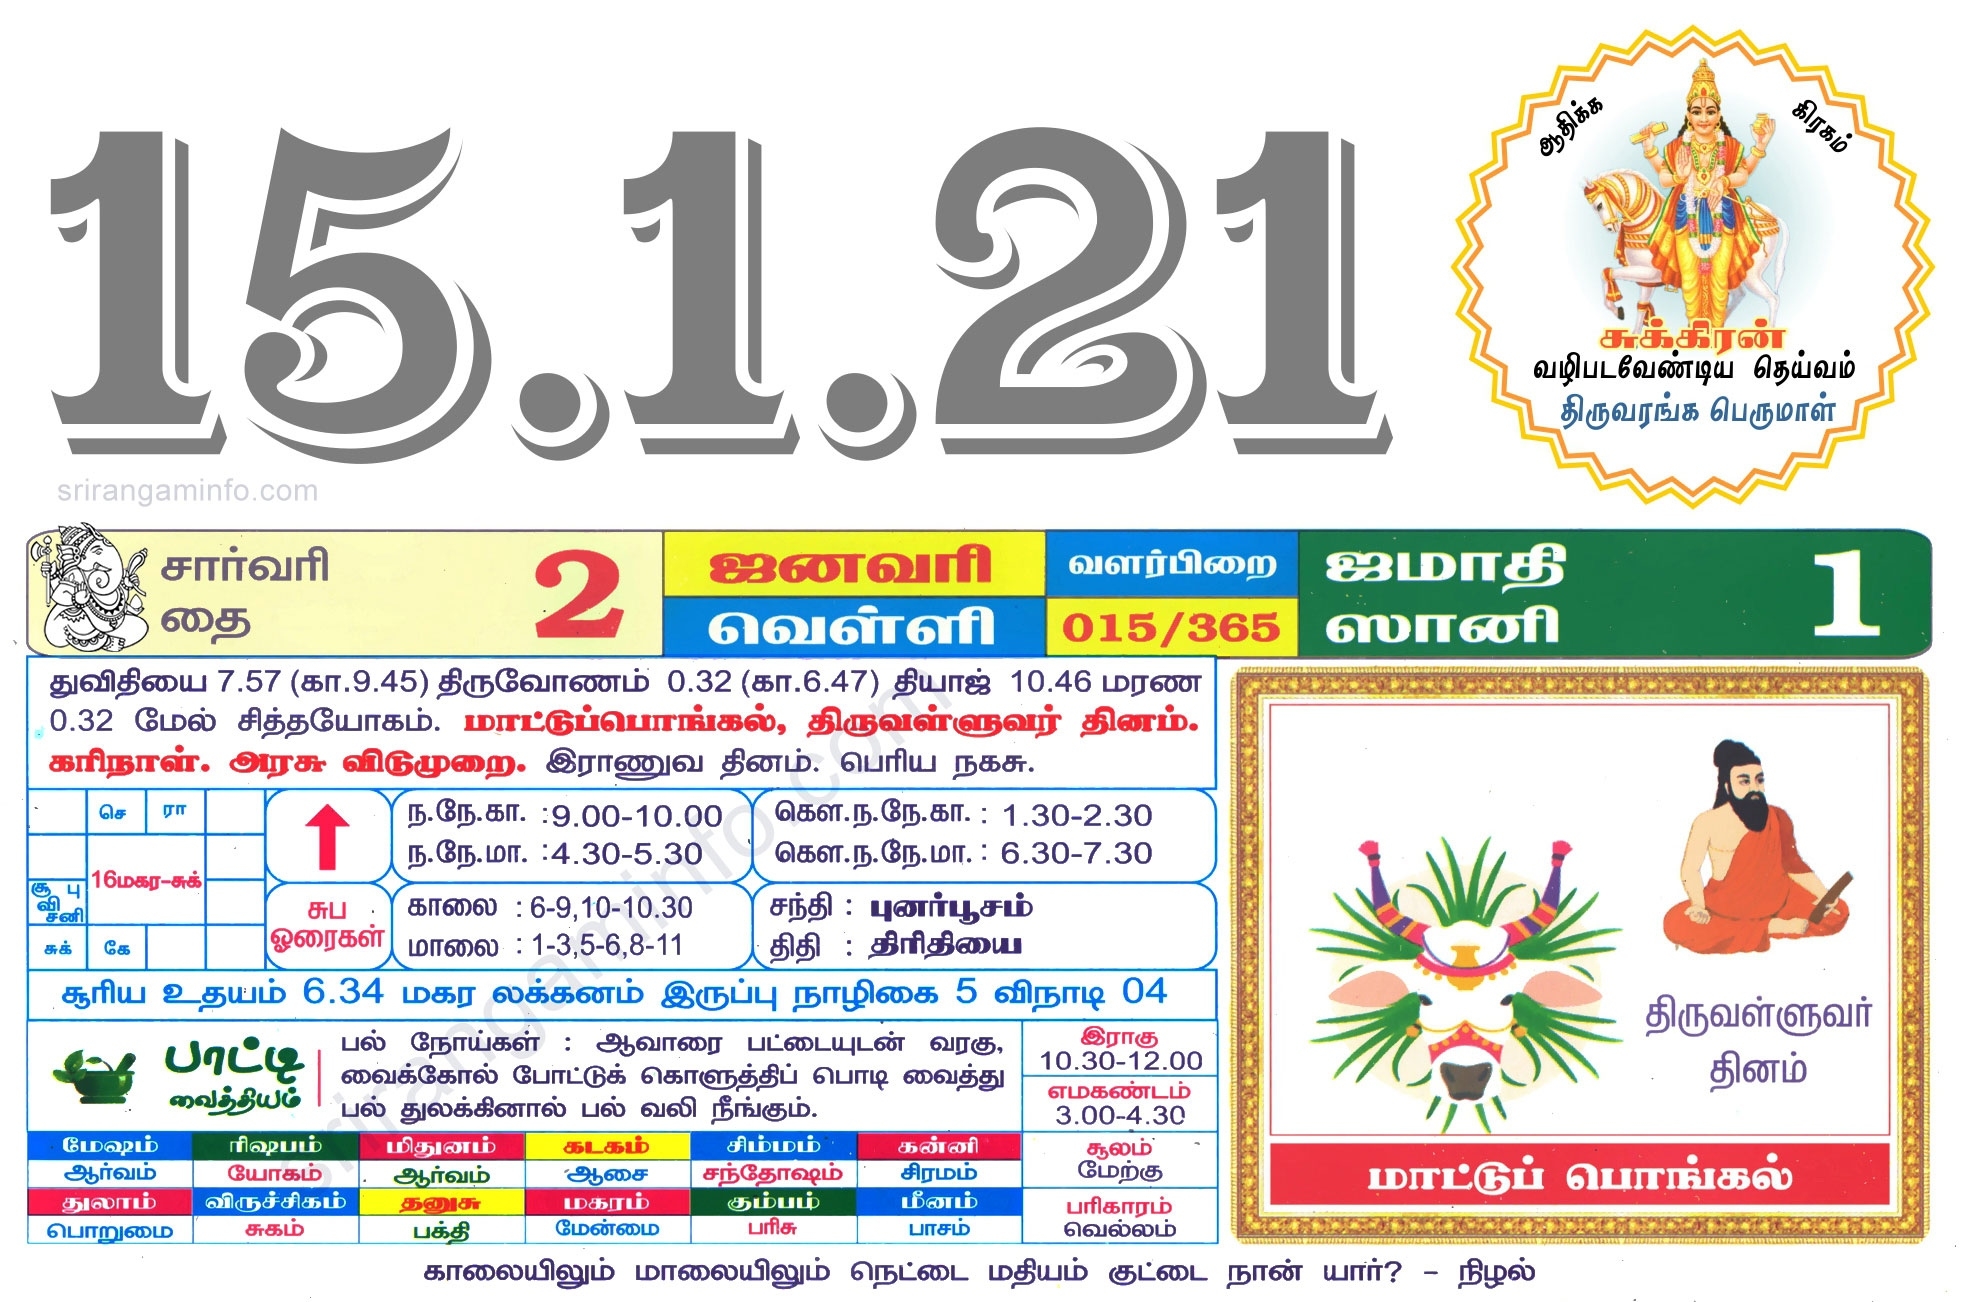 Tamil Daily Calendar 2021, Tamil Calendar 2021, Nalla Neram - தமிழ் தினசரி காலண்டர் Tamil Daily Calendar 2021 September